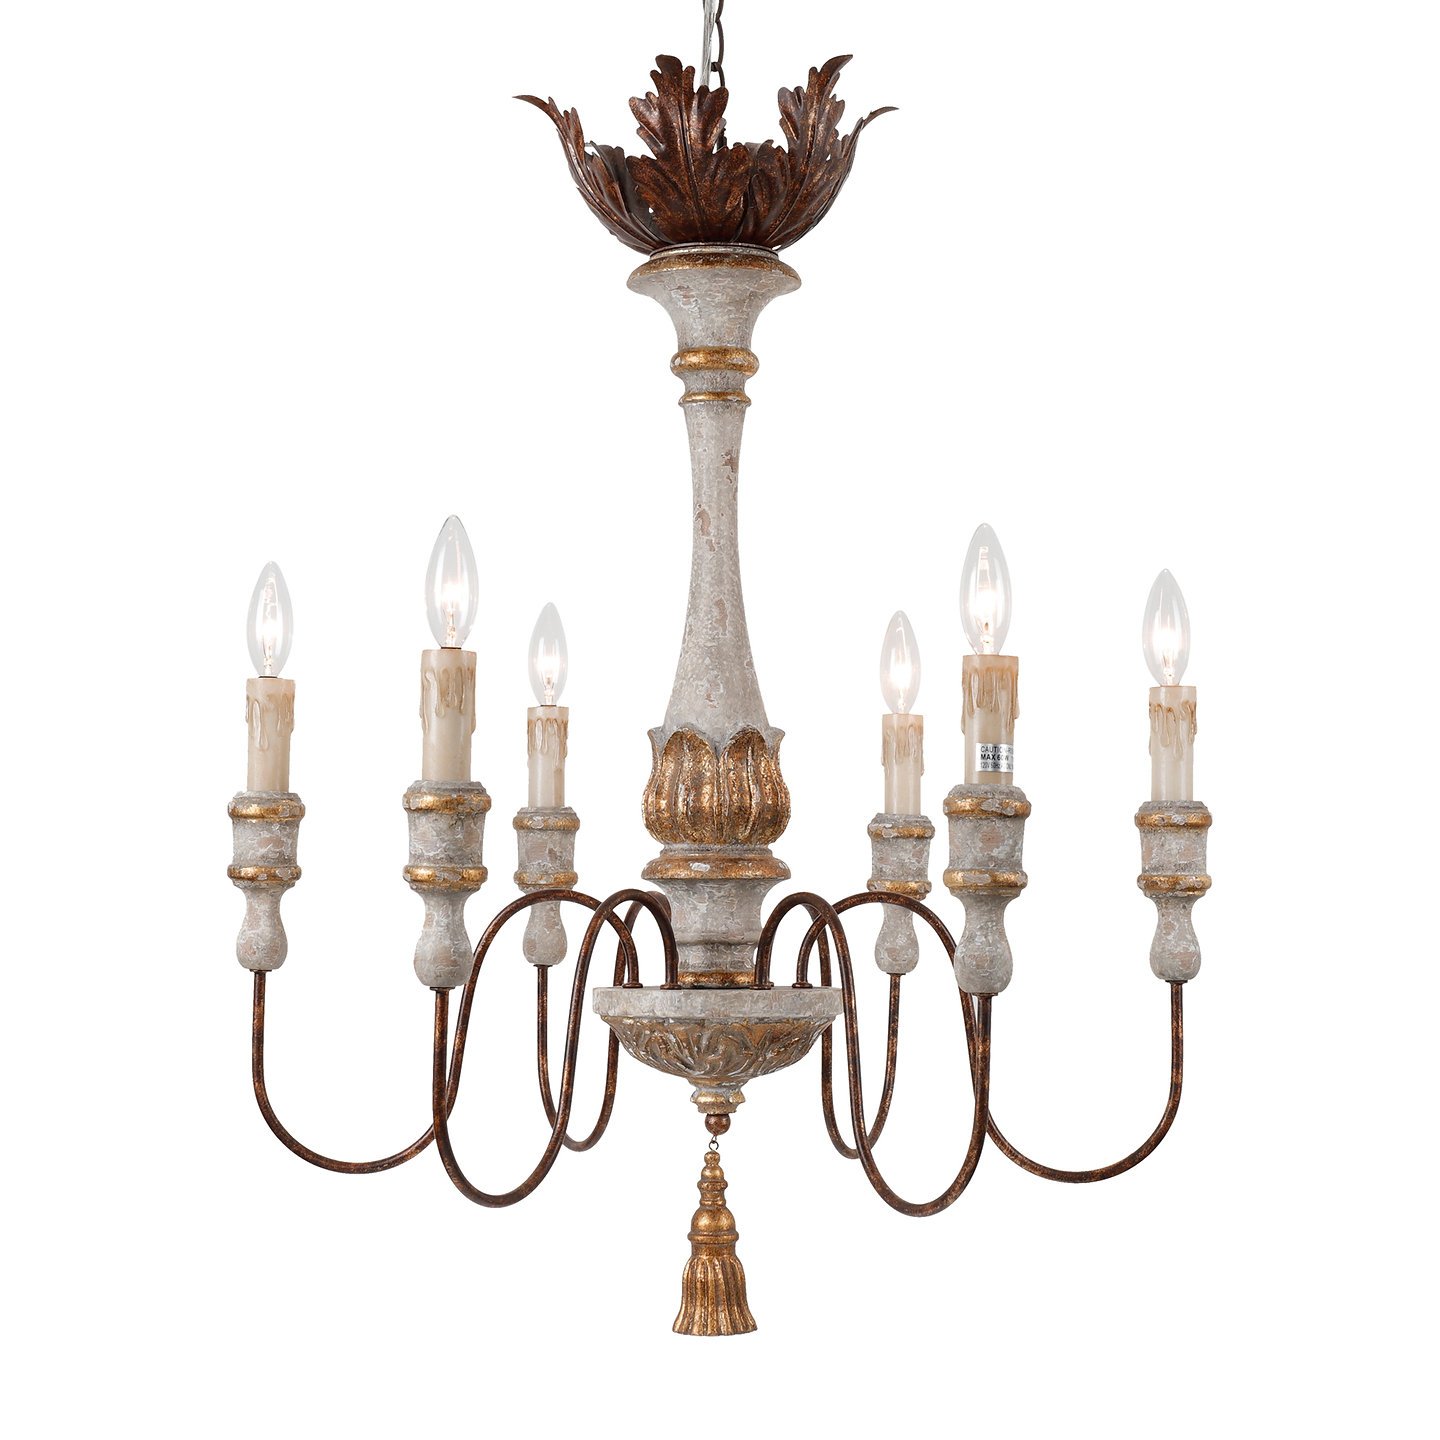 Image of Antique European style 6-light chandelier